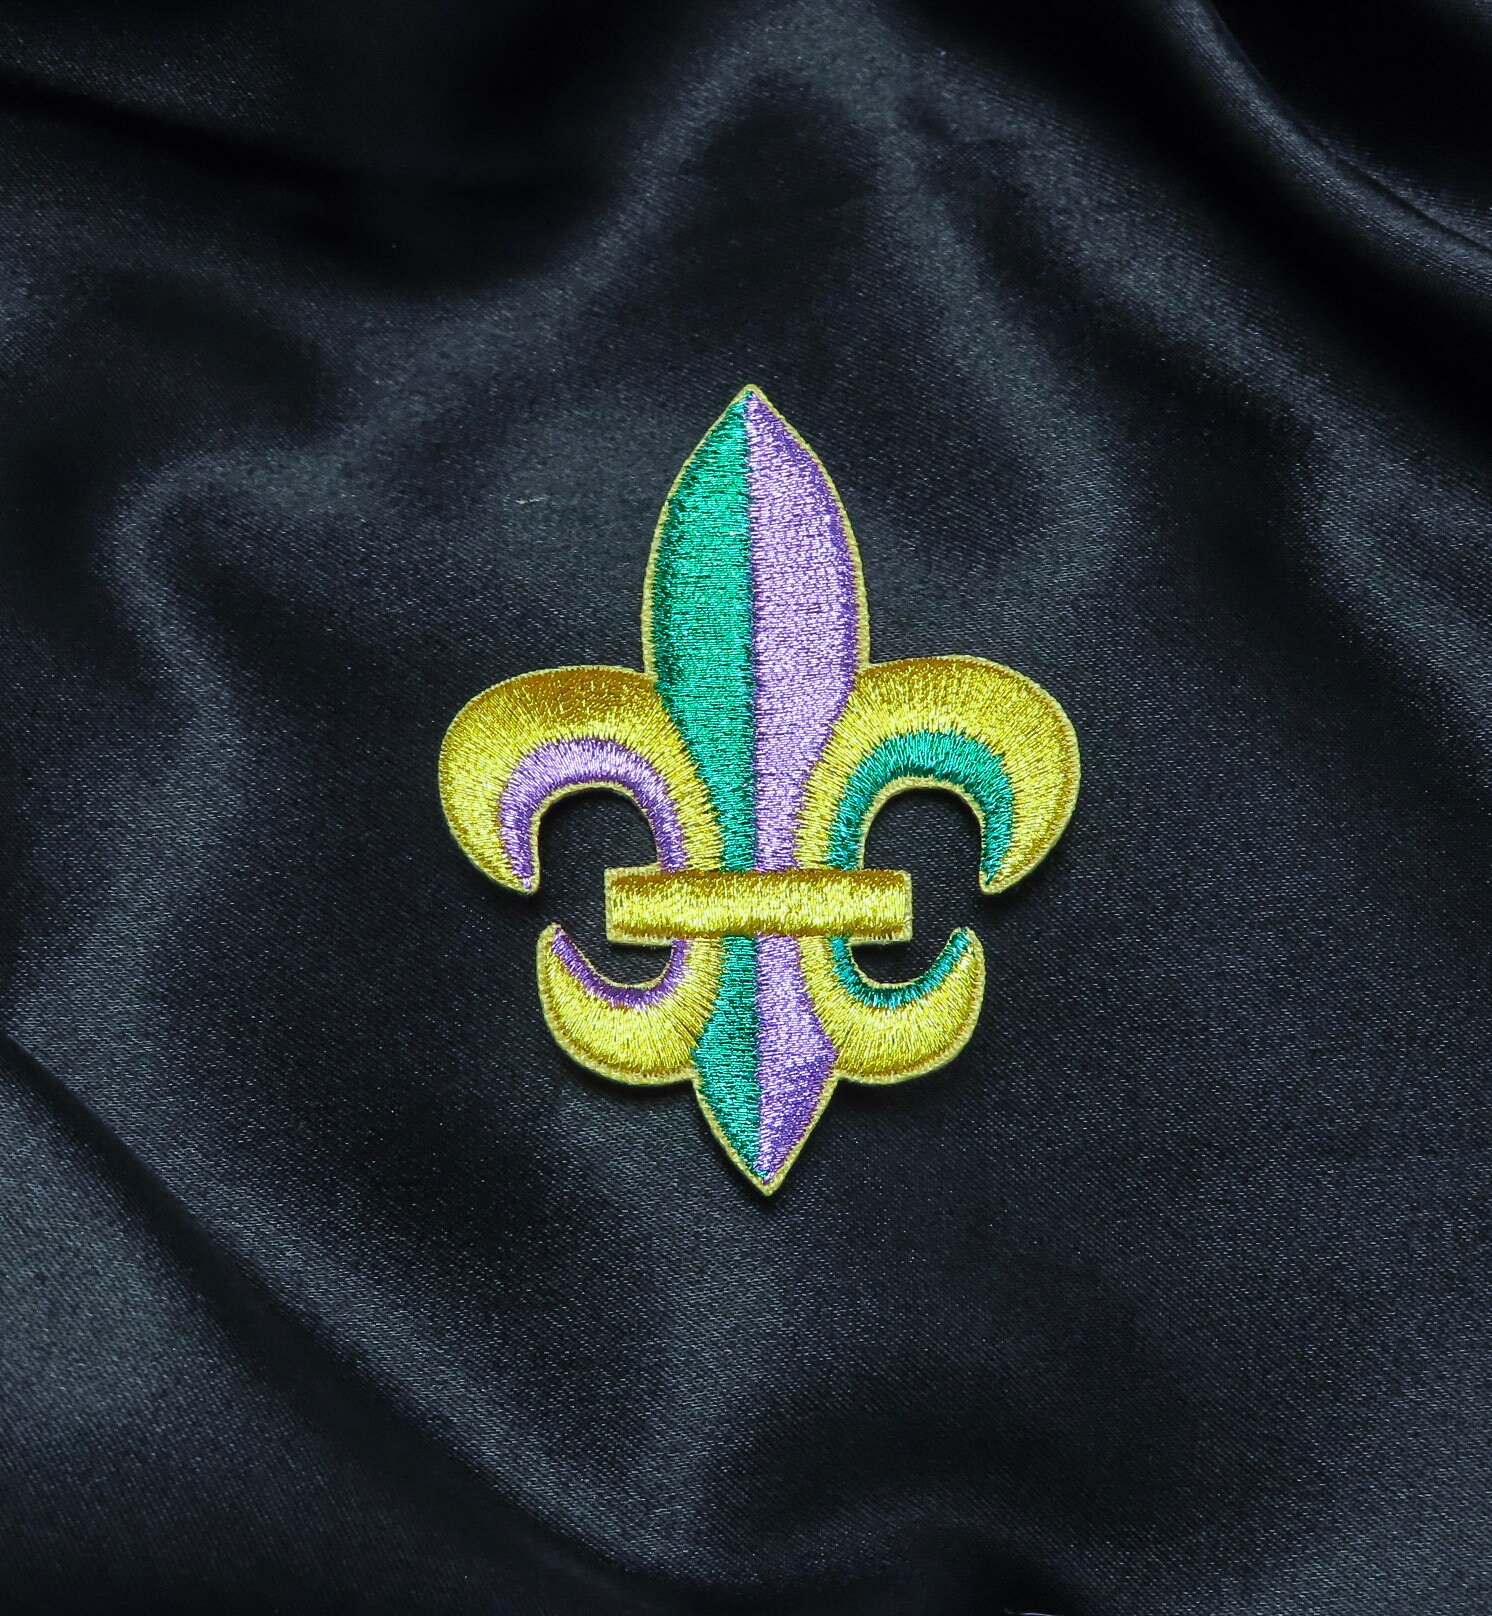 MARDI GRAS - Green/purple/Gold - Iron on Applique/Embroidered